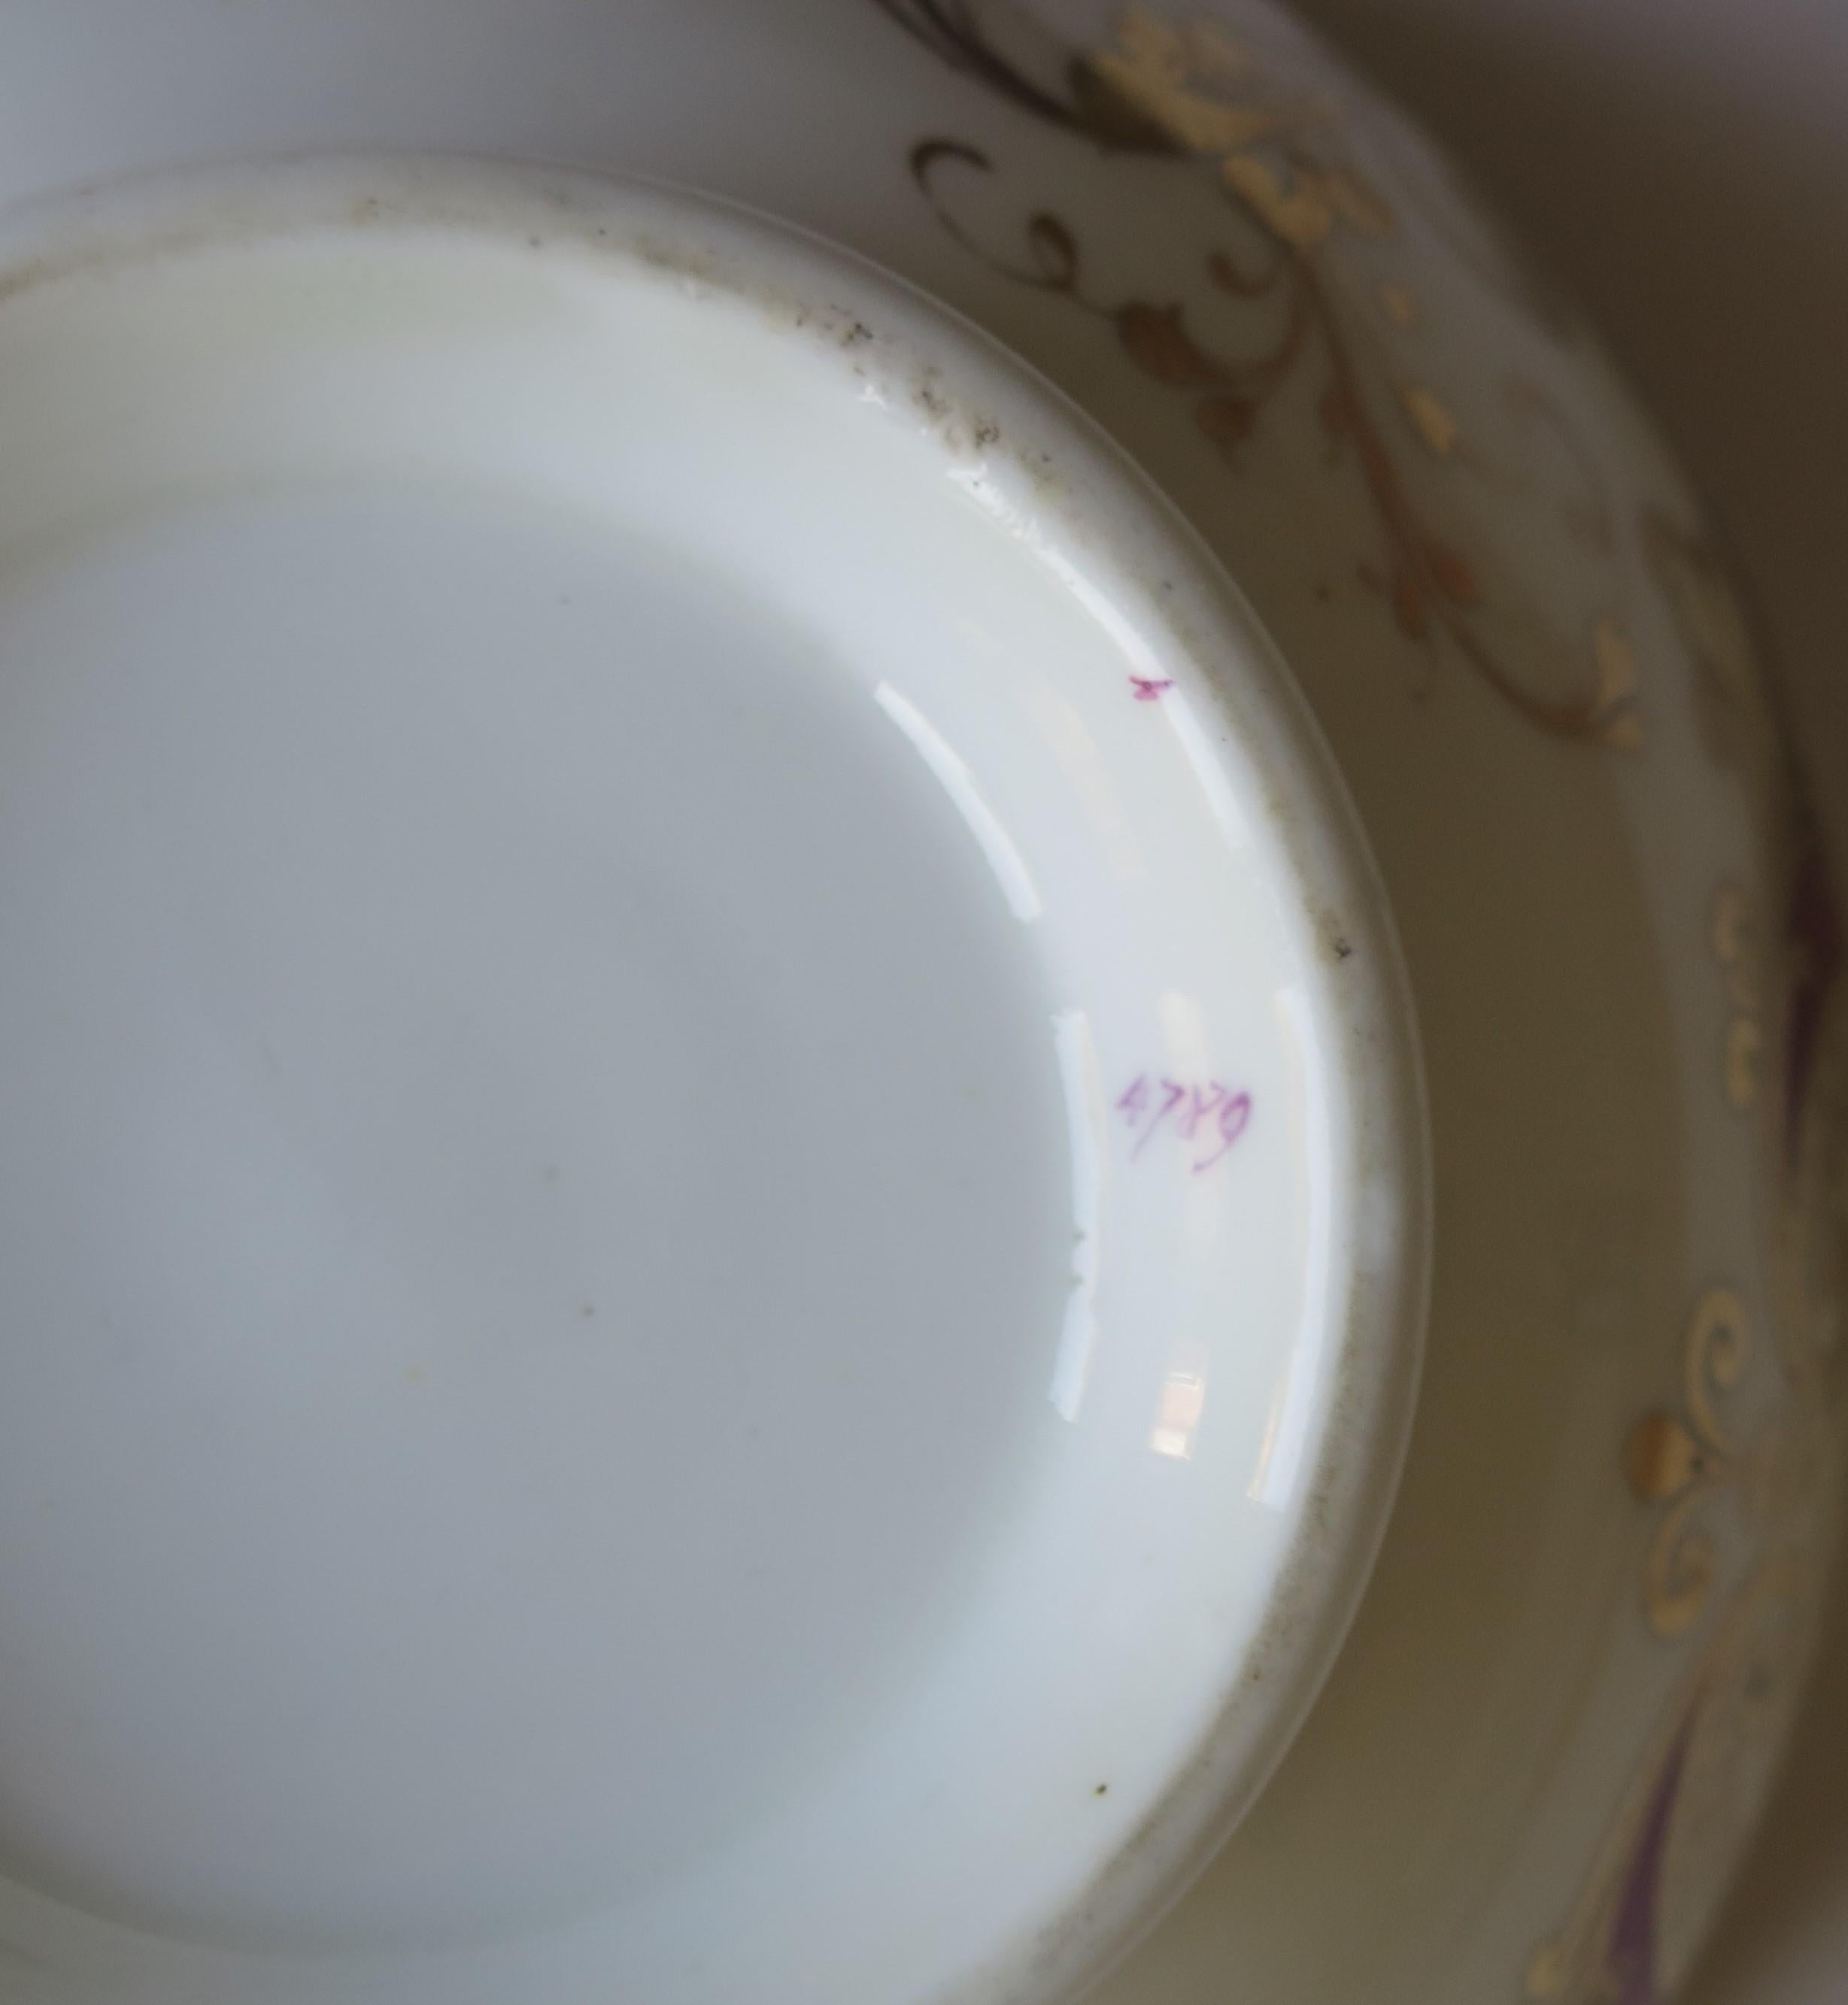 Fine H & R Daniel Porcelain Slop Bowl in Recorded Pattern 4789, circa 1830 8